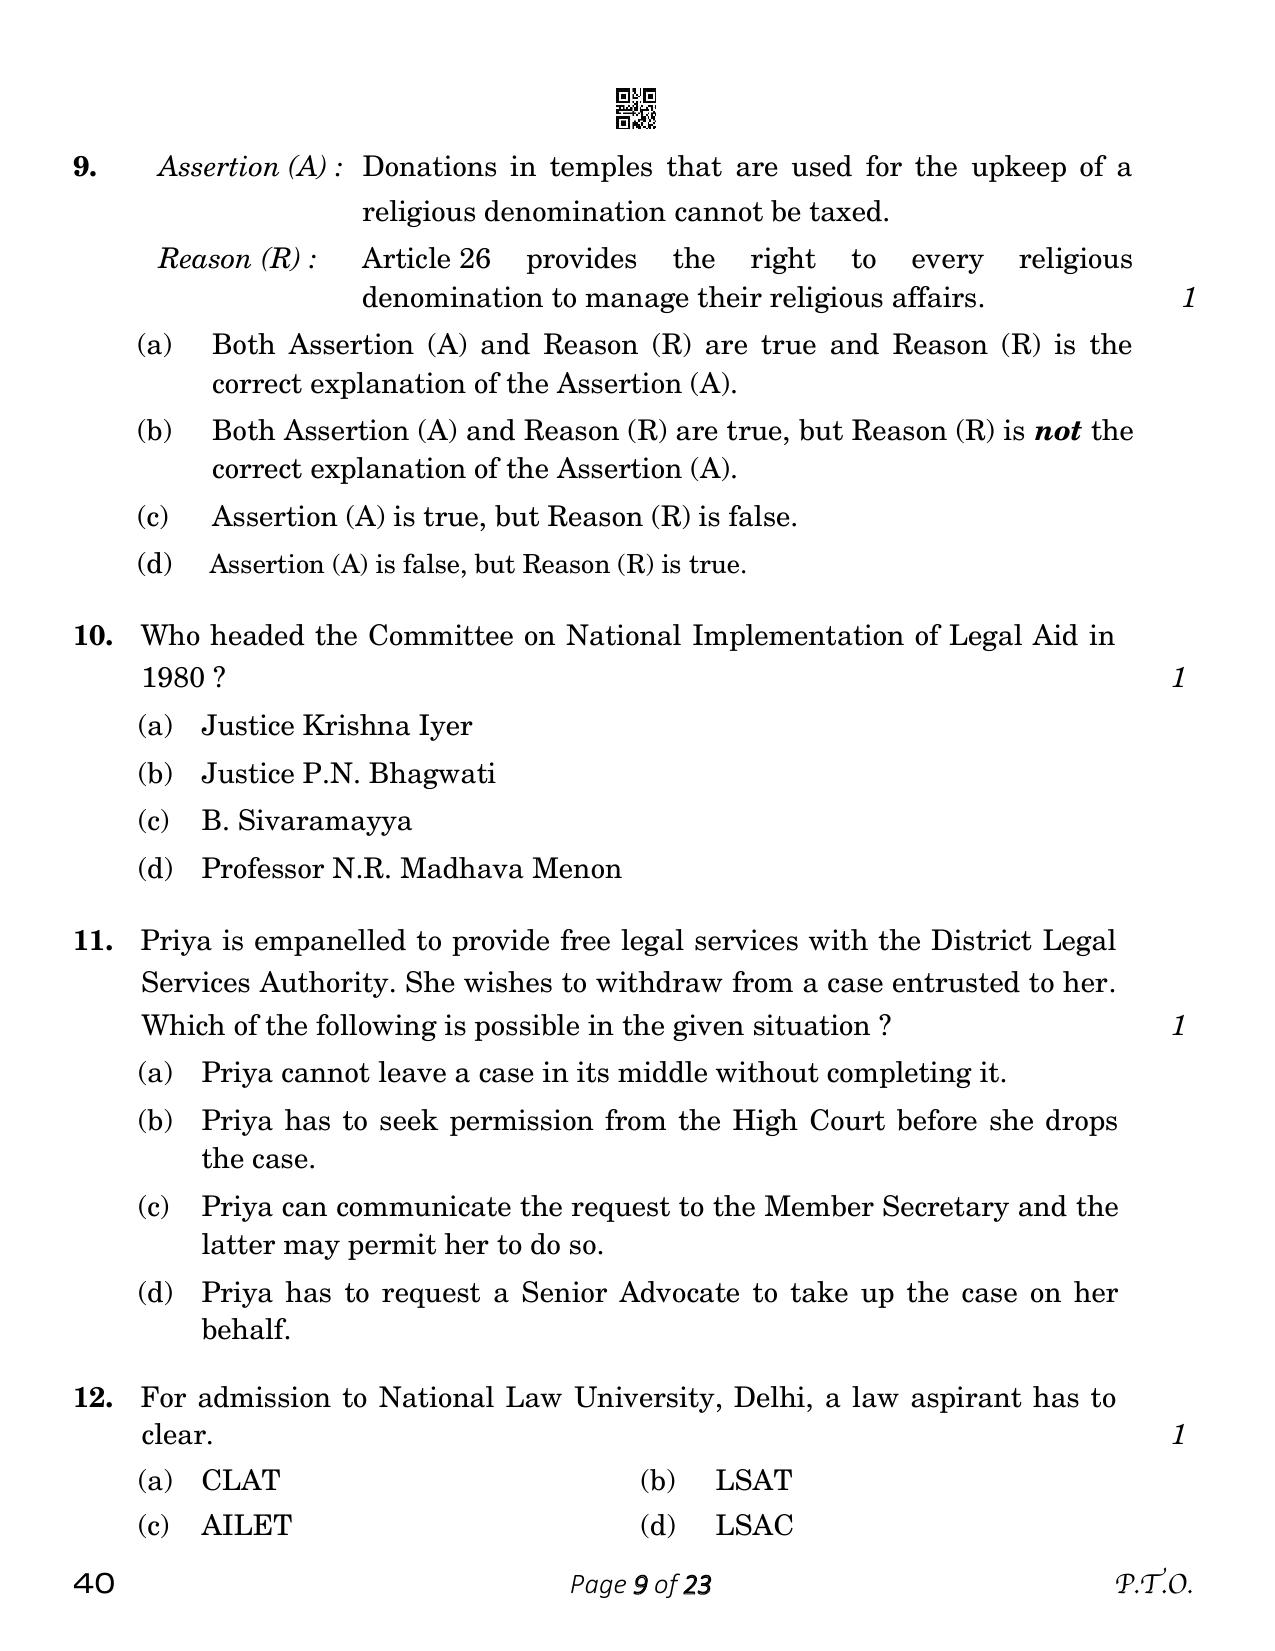 CBSE Class 12 Legal Studies (Compartment) 2023 Question Paper - Page 9